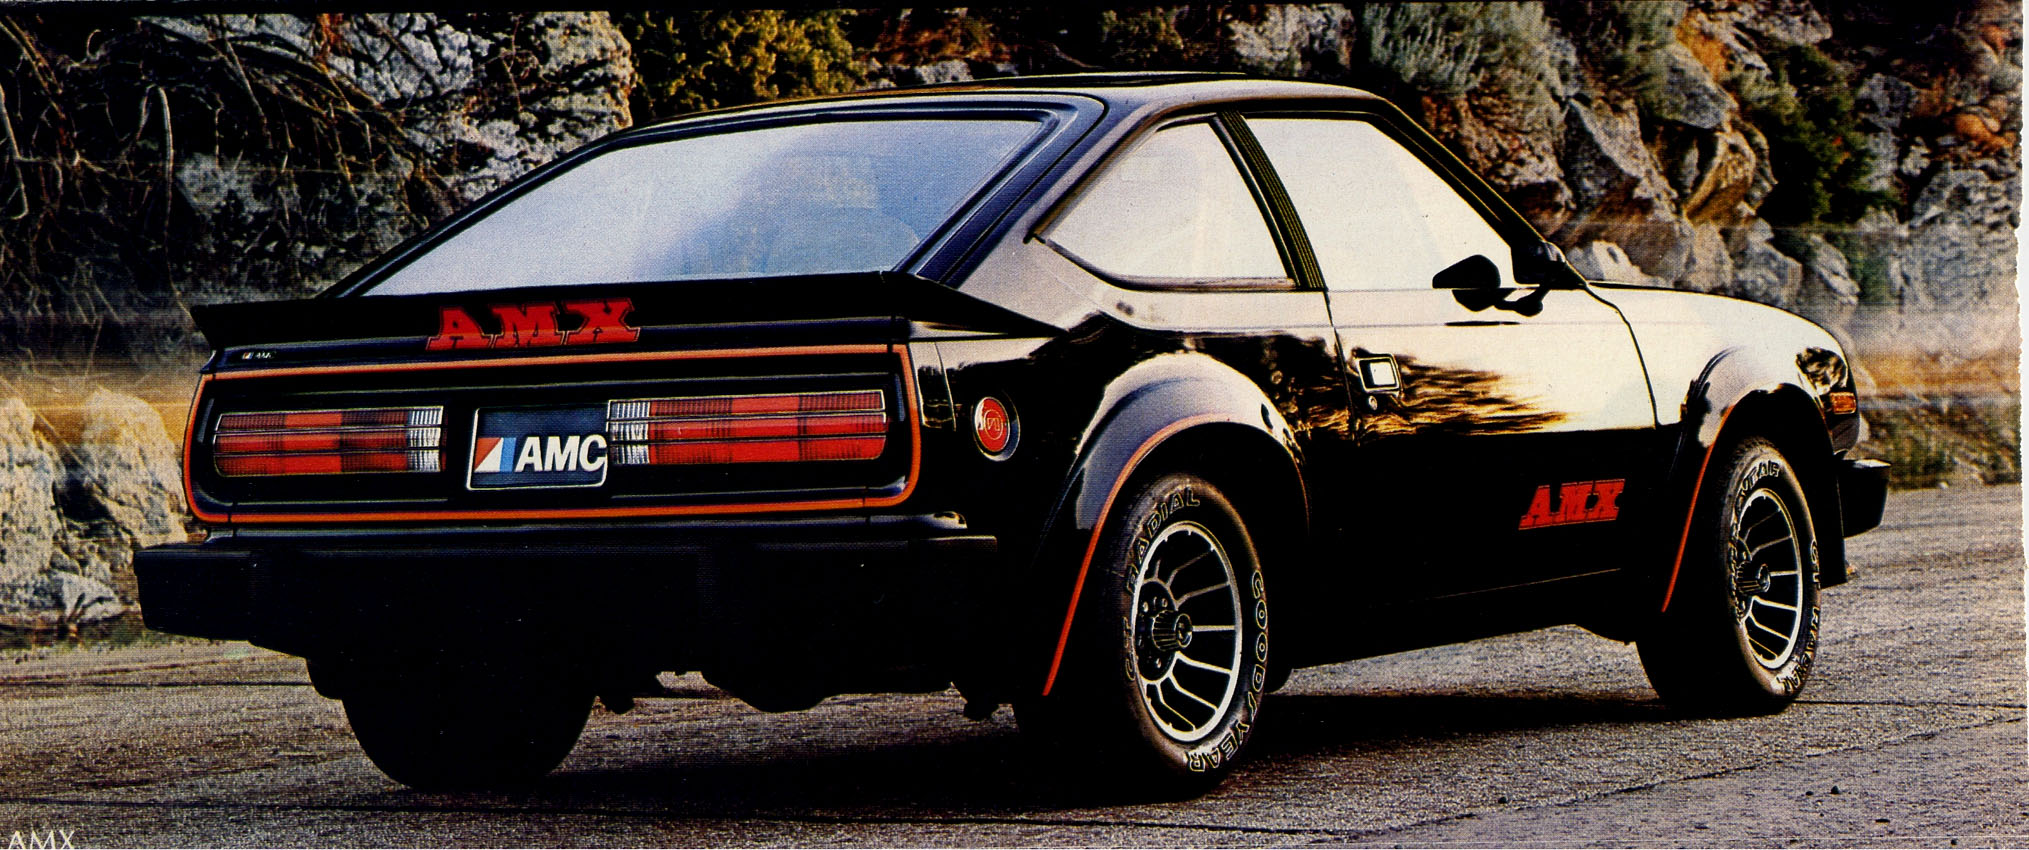 1979_AMC-07